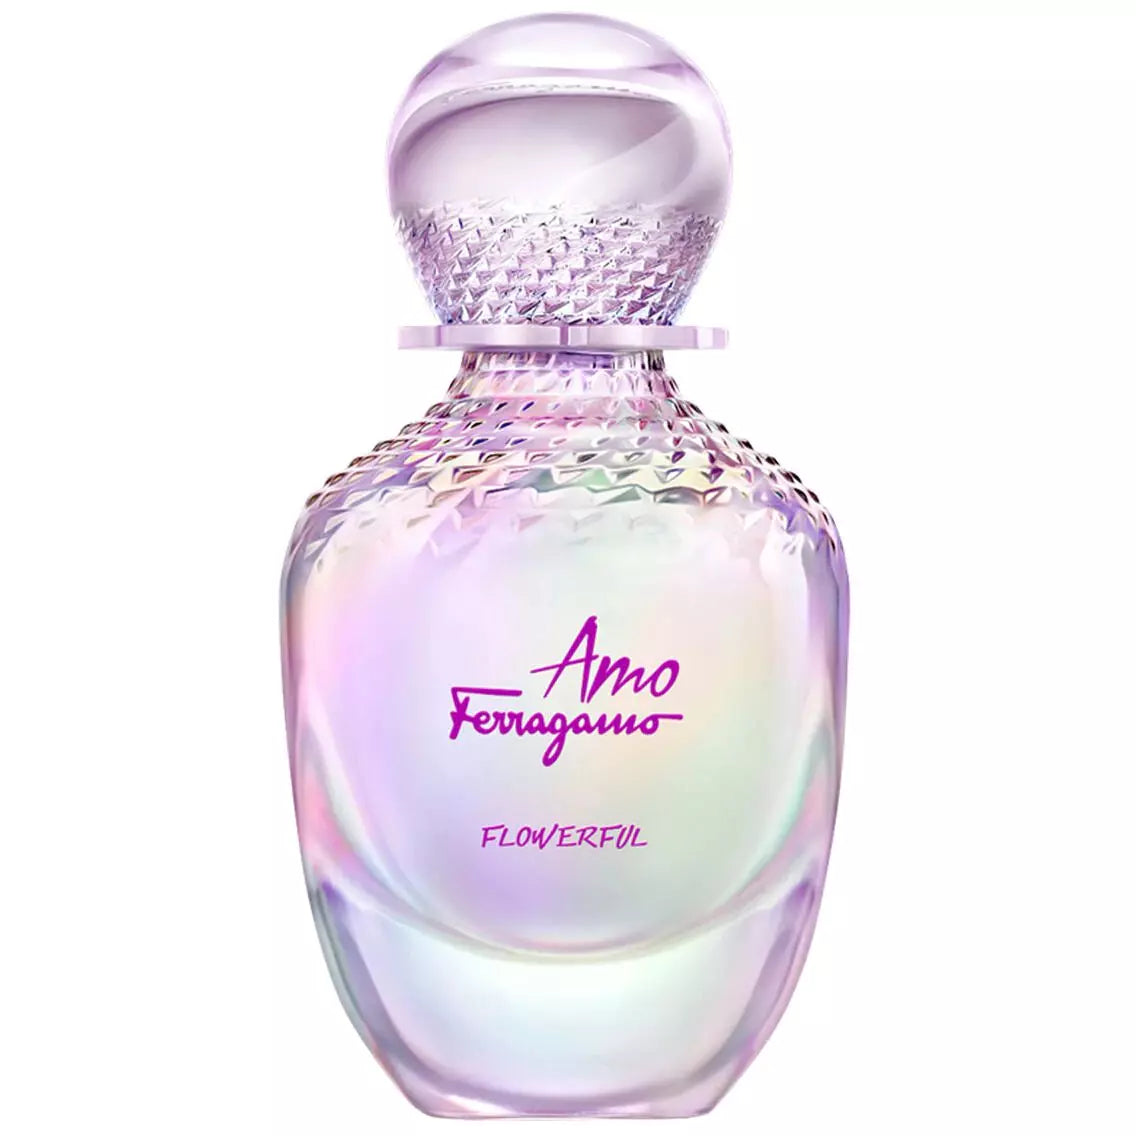 Salvatore Ferragamo Amo Flowerful Perfume Para Mujer 100ml Eau de Toilette